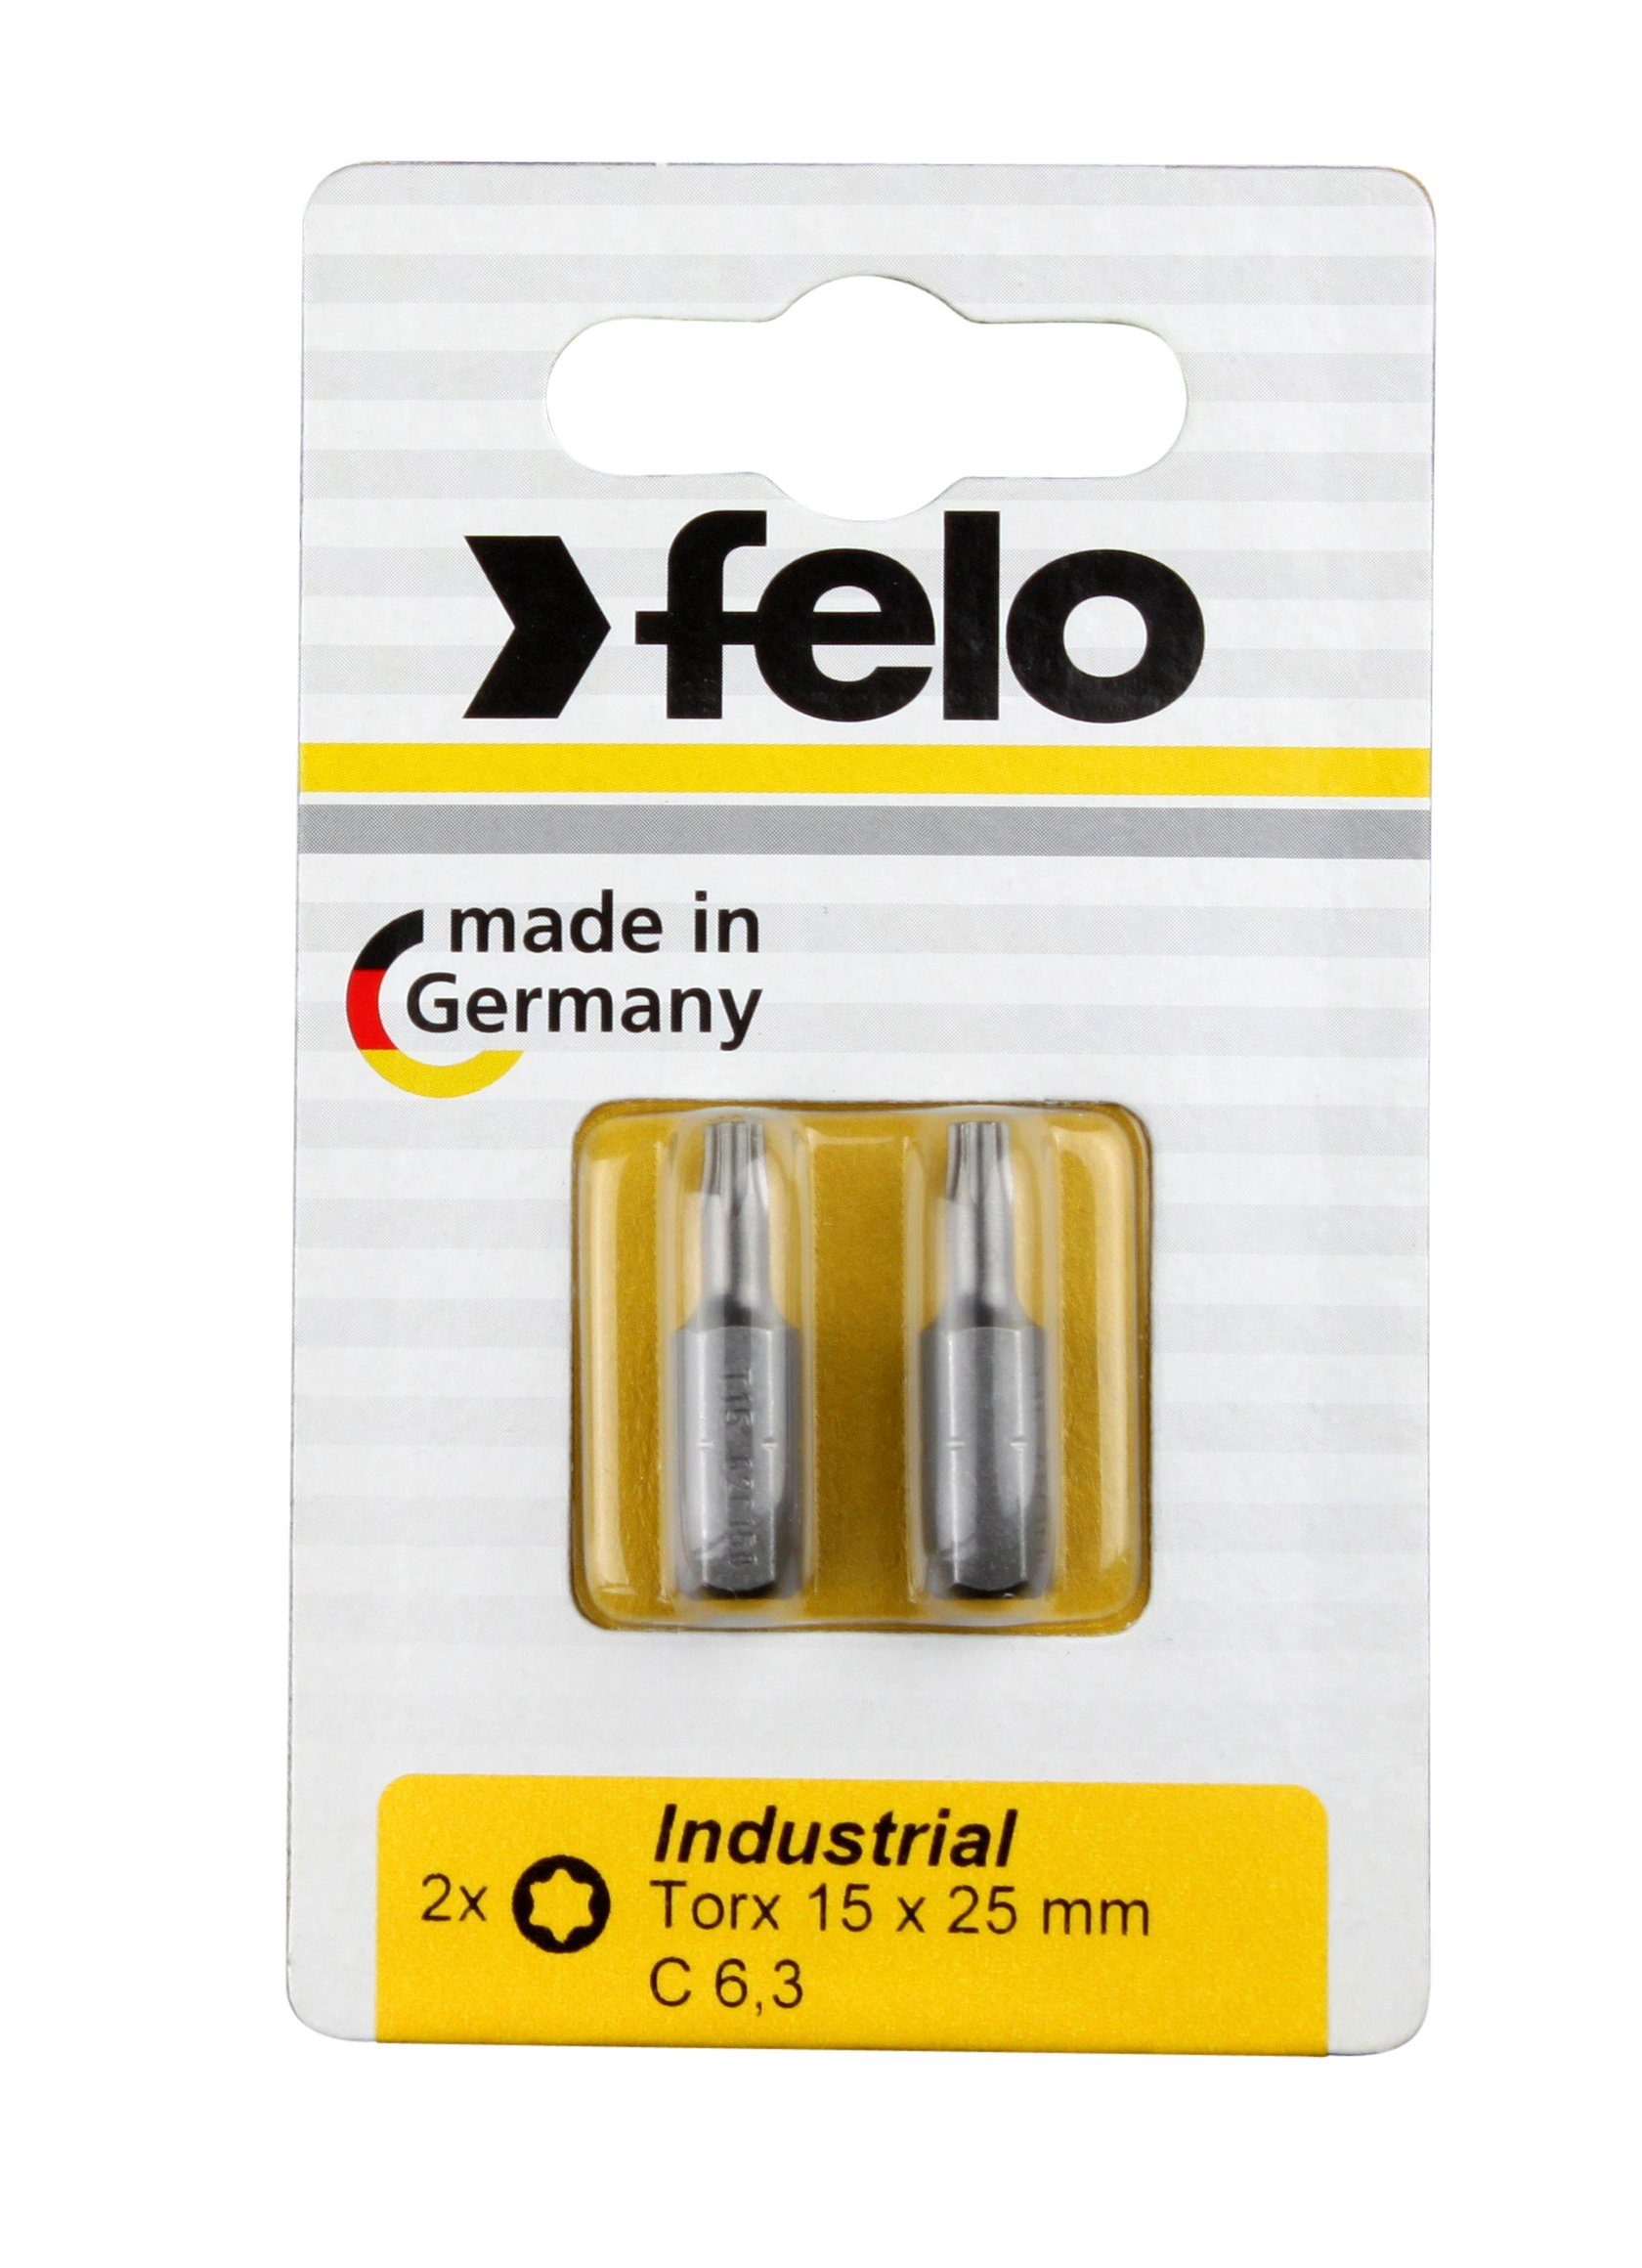 Felo Torx-Bit Felo Bit, Industrie C 6,3 x 25mm, 2 Stk auf Karte 2x Tx 15